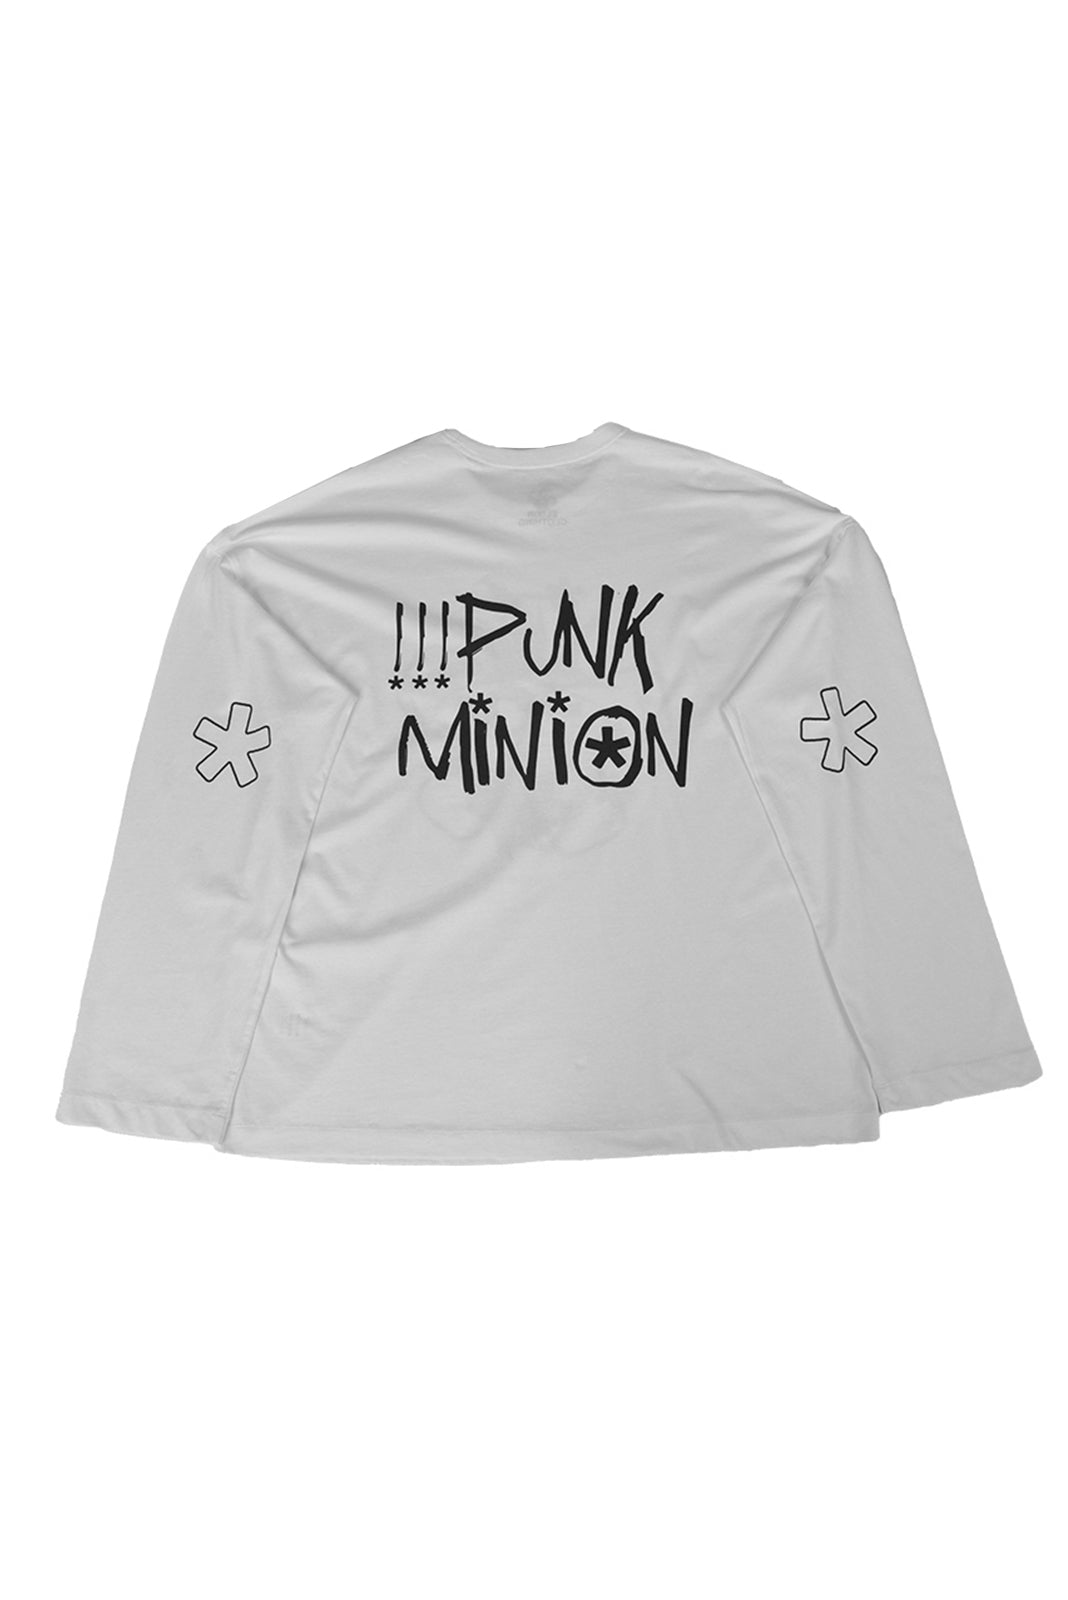 Elixir Punk Minion Long-Sleeve White Tee